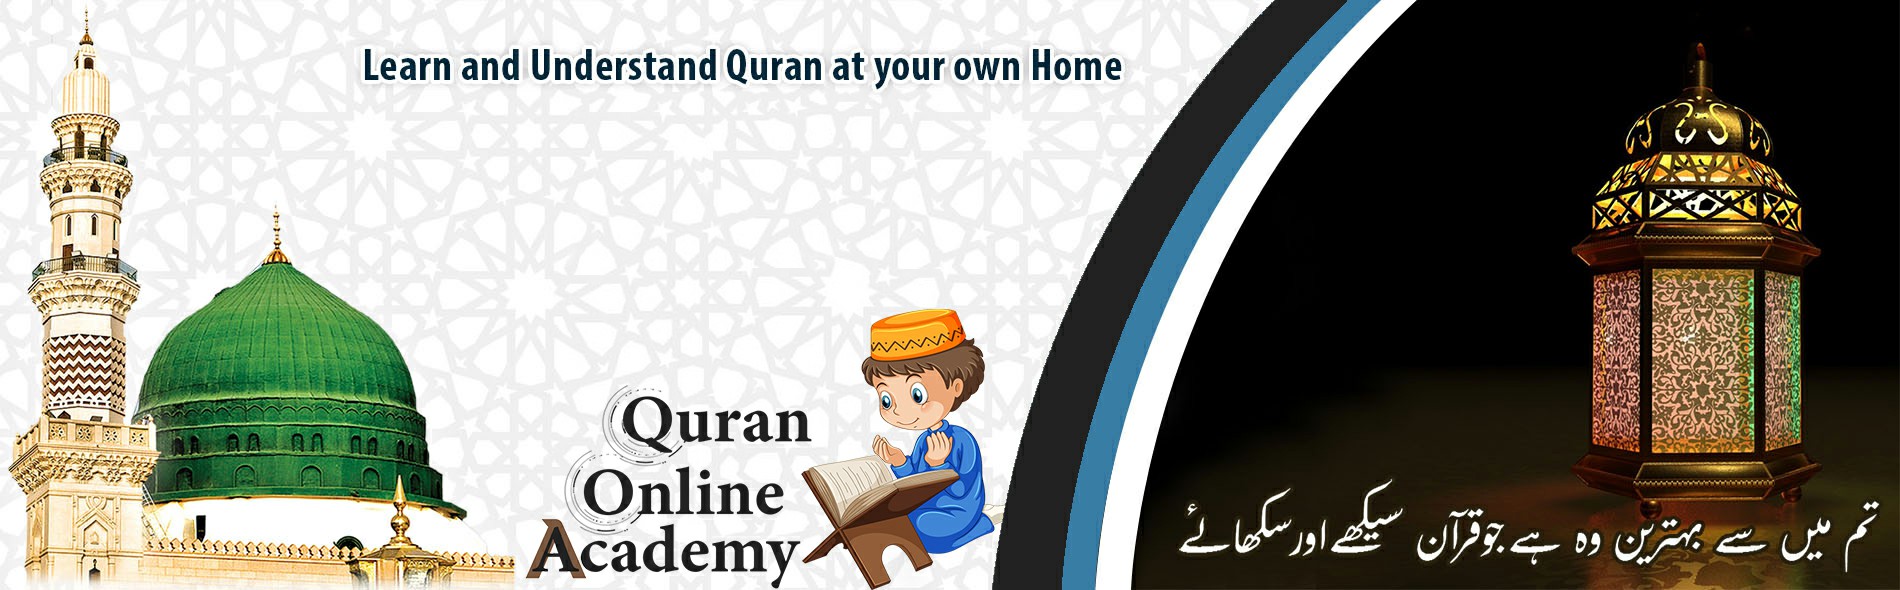 Online Quran Reading AMERICA